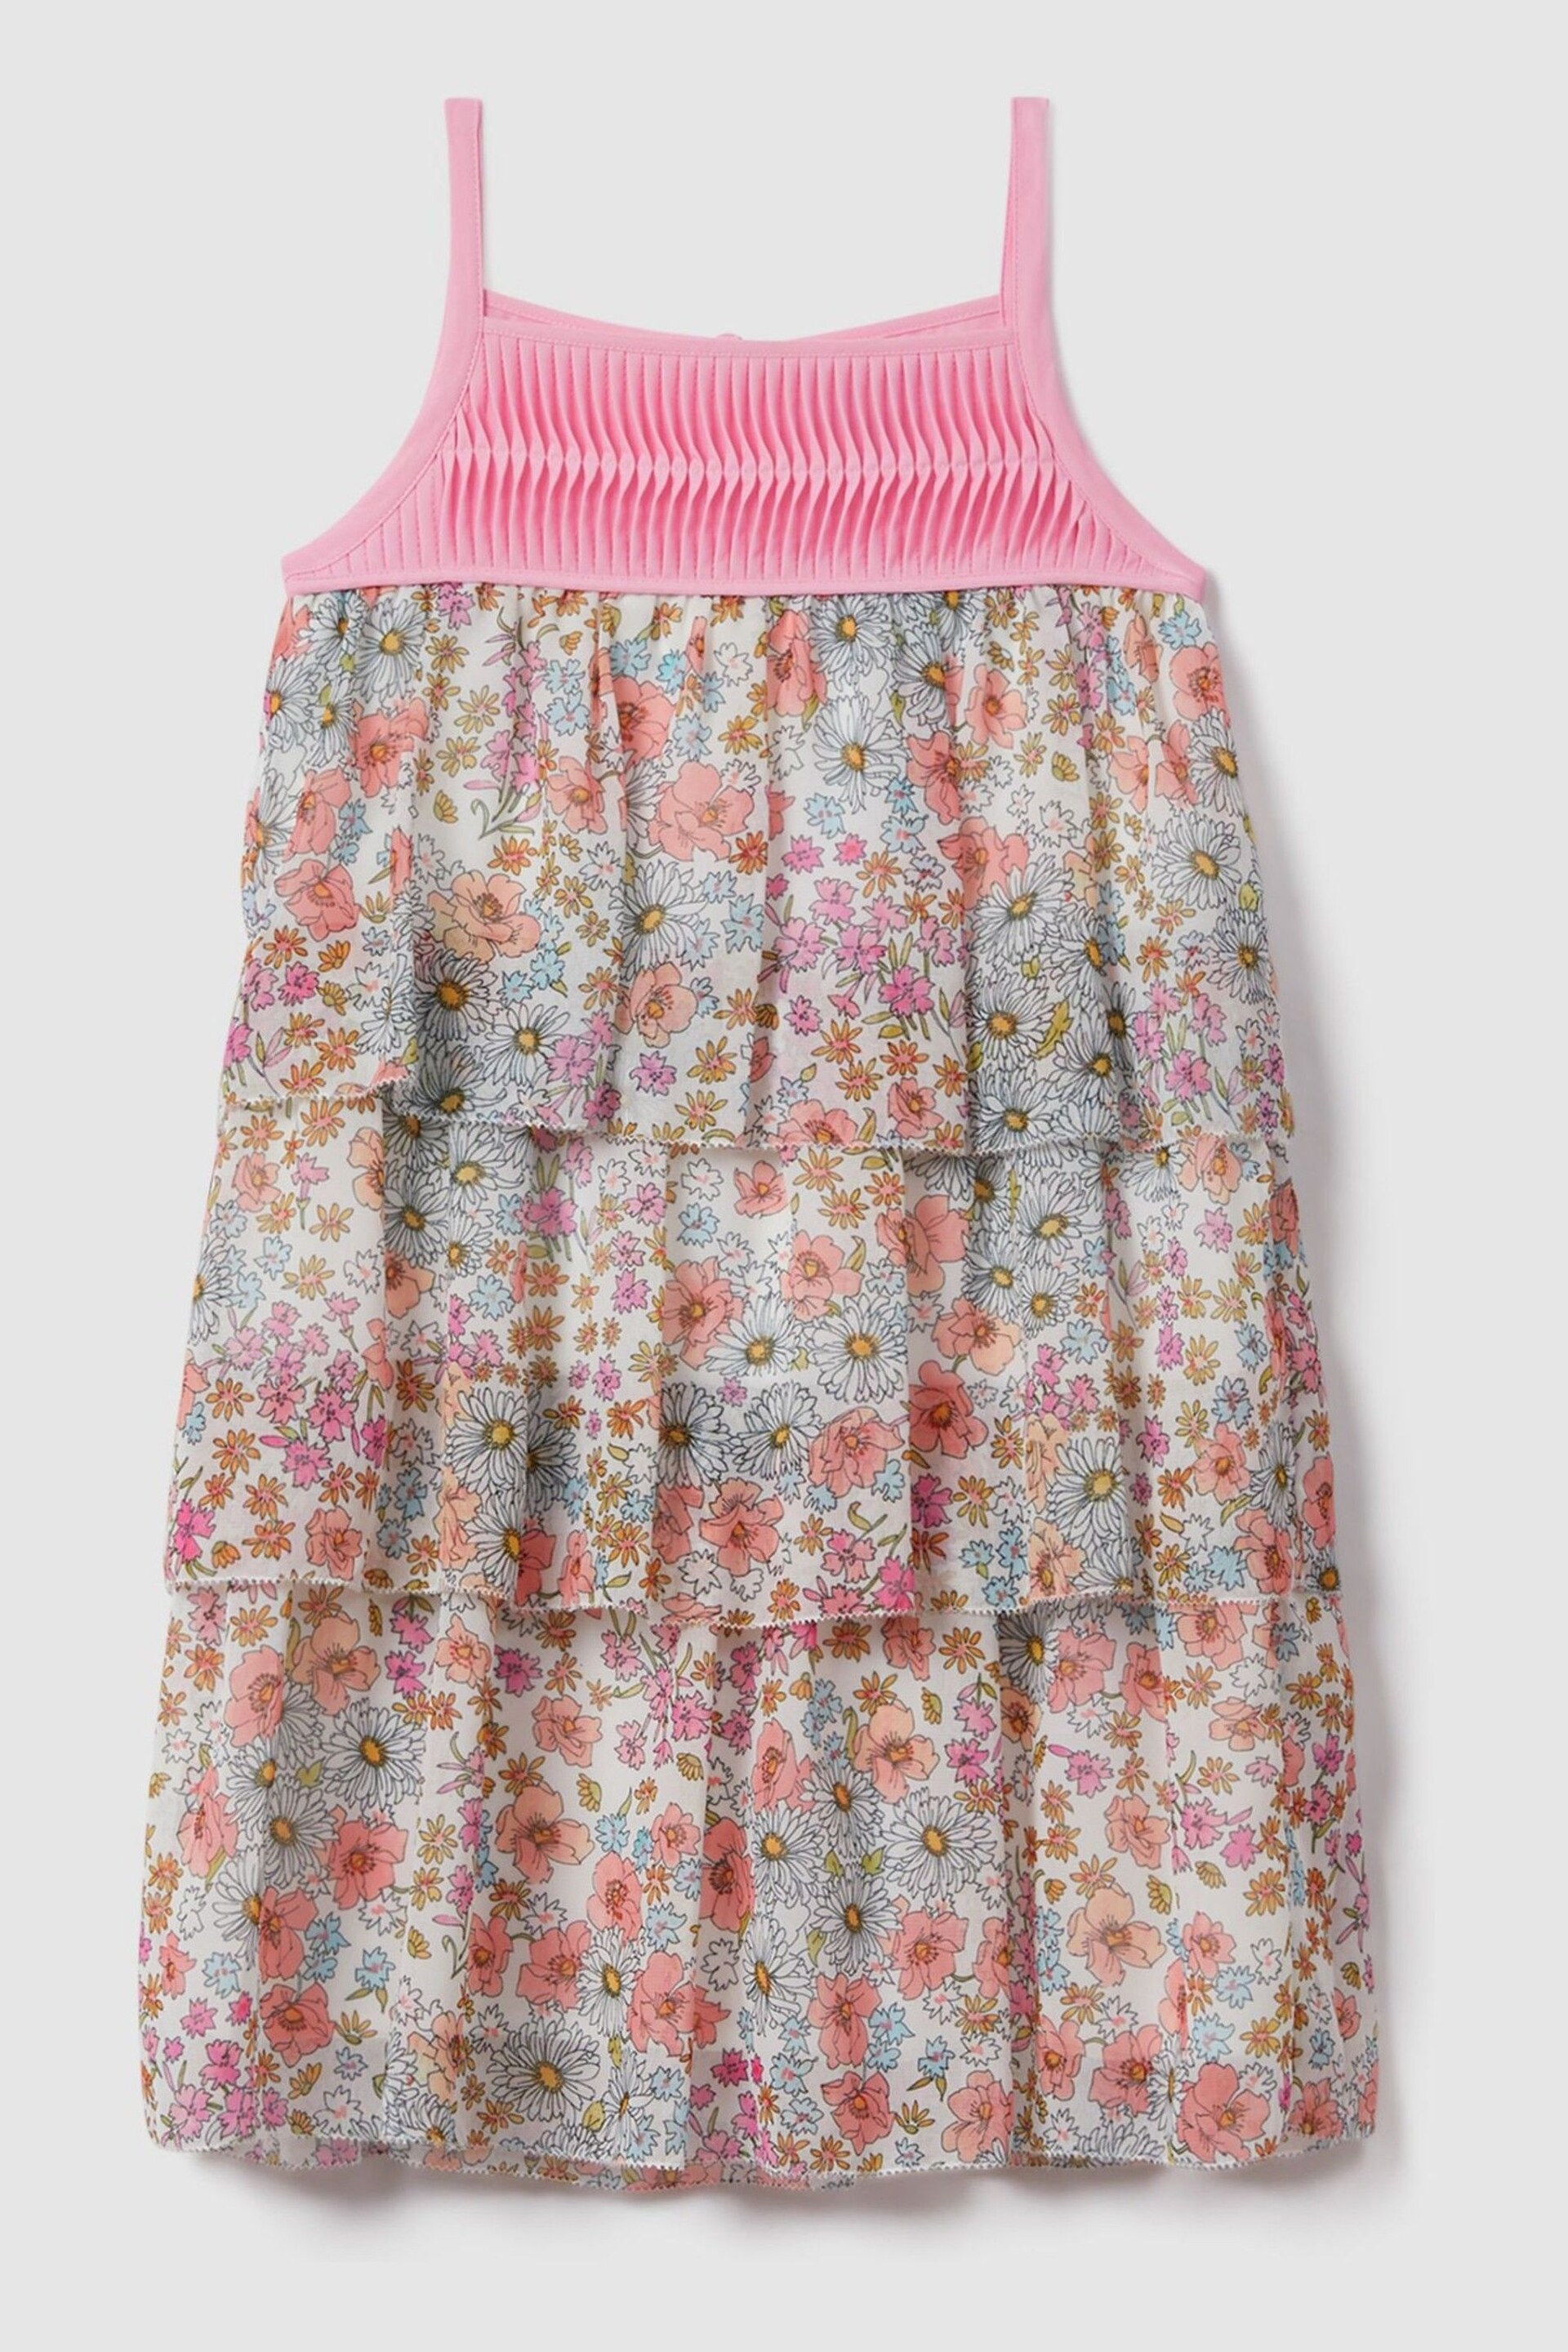 Reiss Pink Print Leela Teen Floral Print Tiered Dress - Image 1 of 5